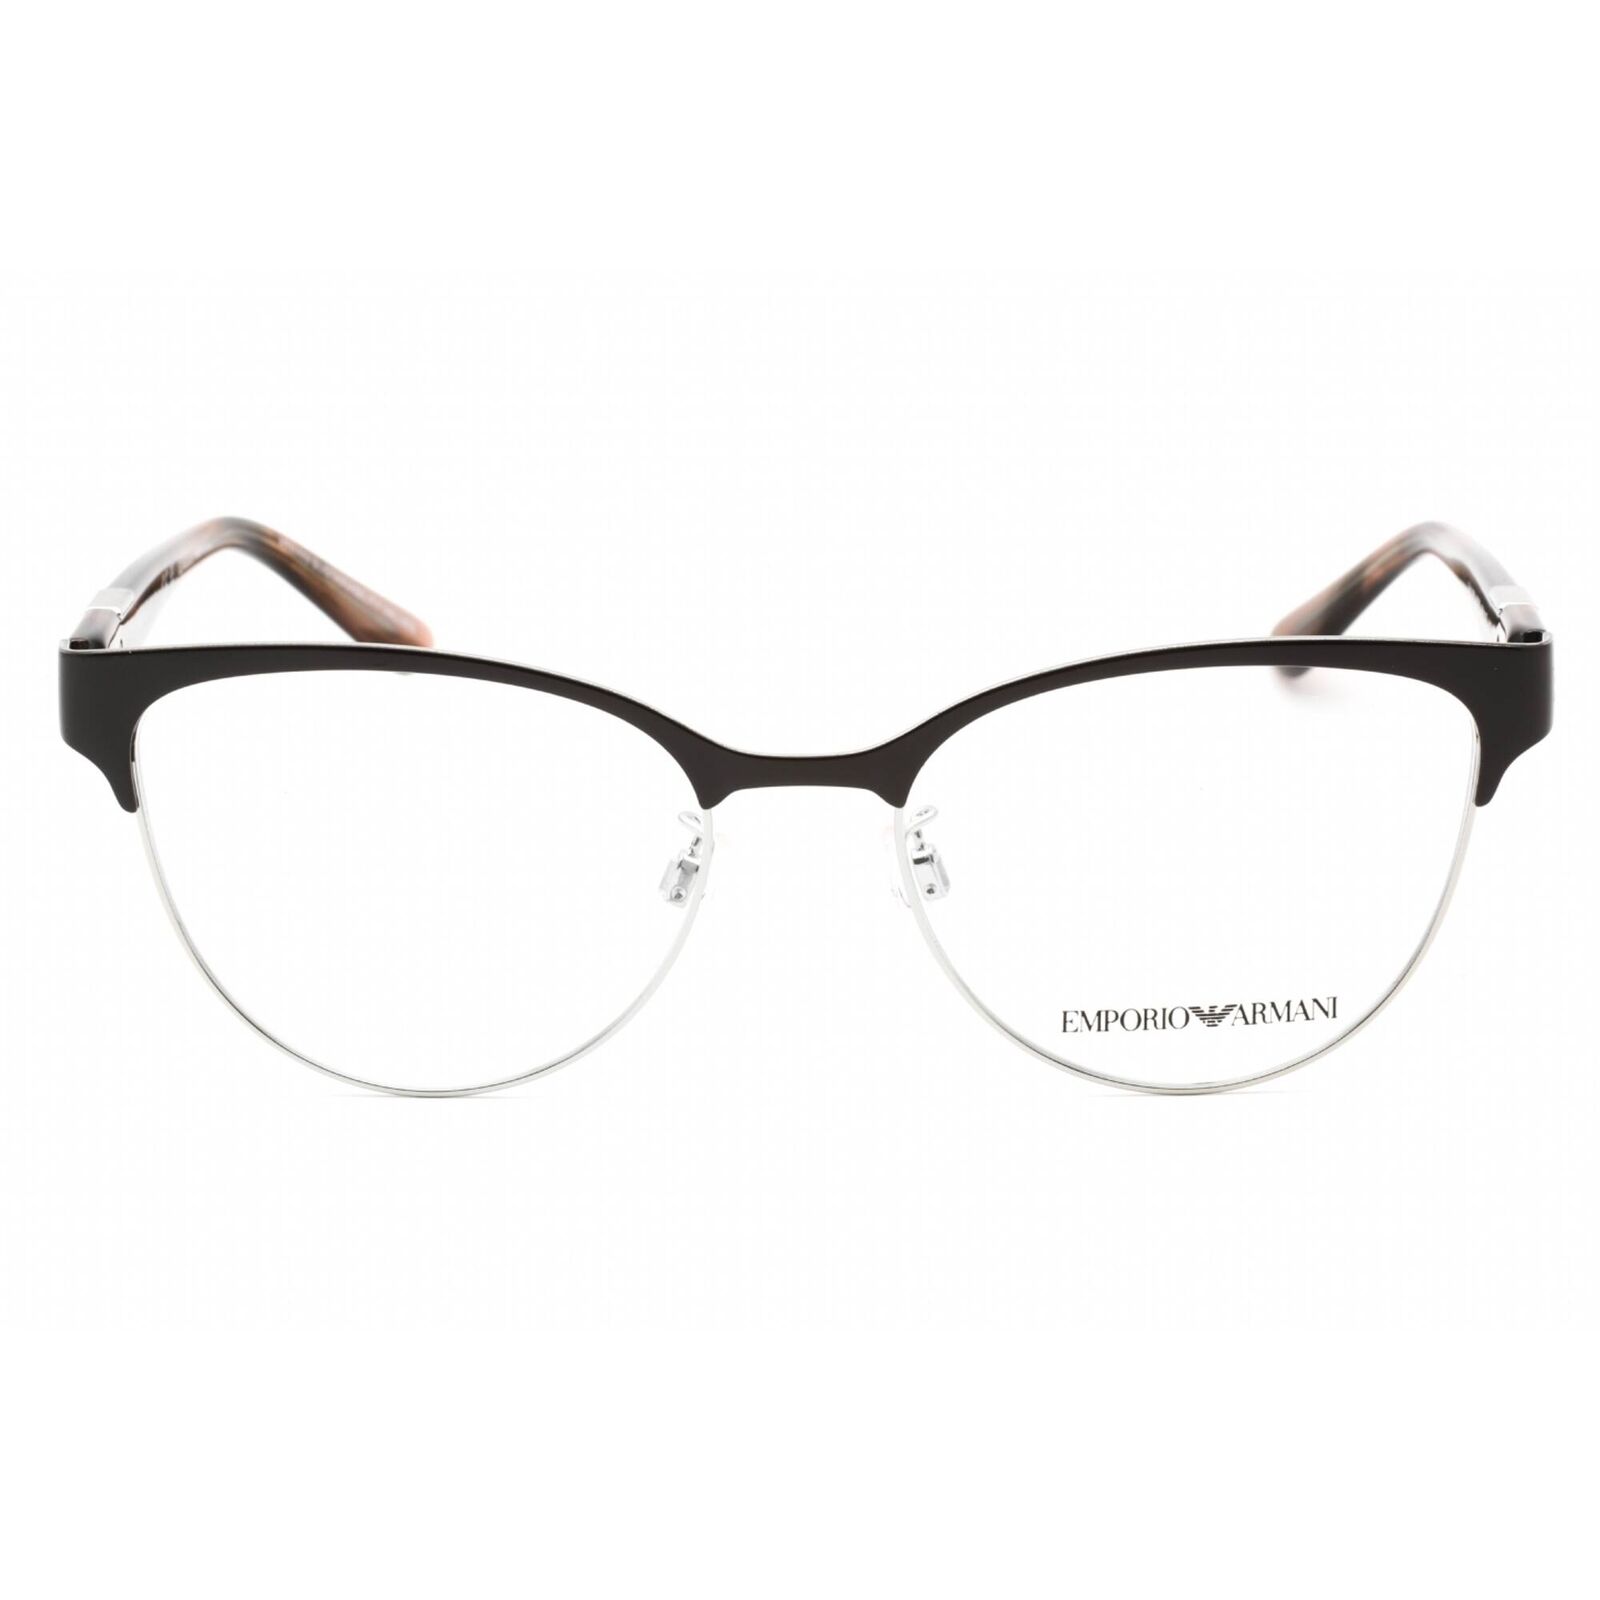 Emporio Armani Women's Eyeglasses Shiny Brown/Silver Cat Eye Frame 0EA1130 3178 Emporio Armani 0EA1130 3178 - фотография #2